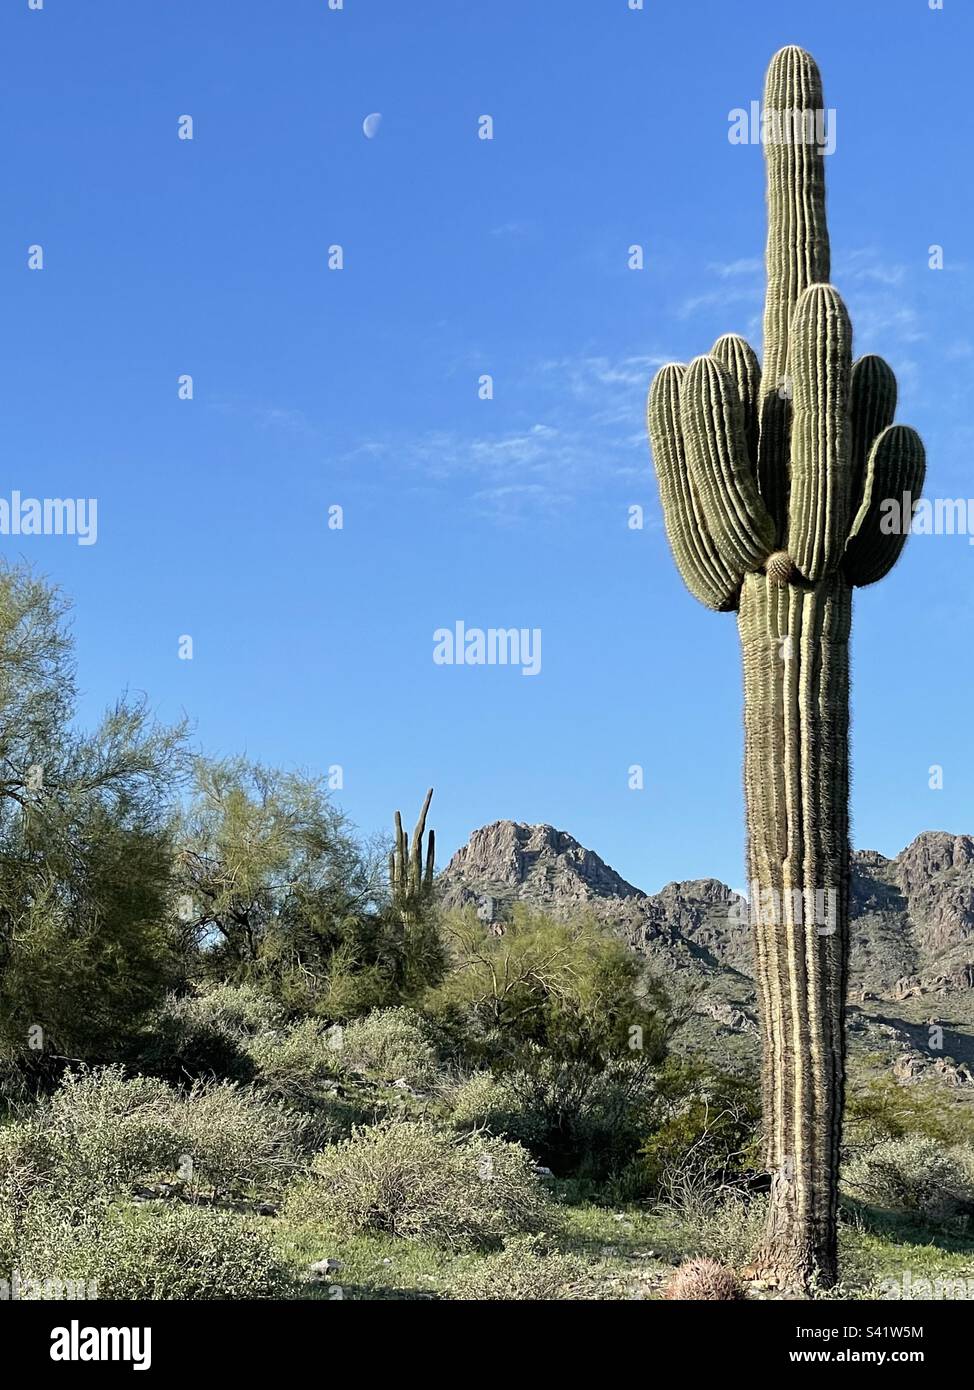 Riesen-Saguaro, Mond in brillantem blauen Himmel, Piestewa Peak, Dreamy Draw, Phoenix Mountains Preserve, 40. Street Trailhead, Arizona, früh am Morgen Stockfoto